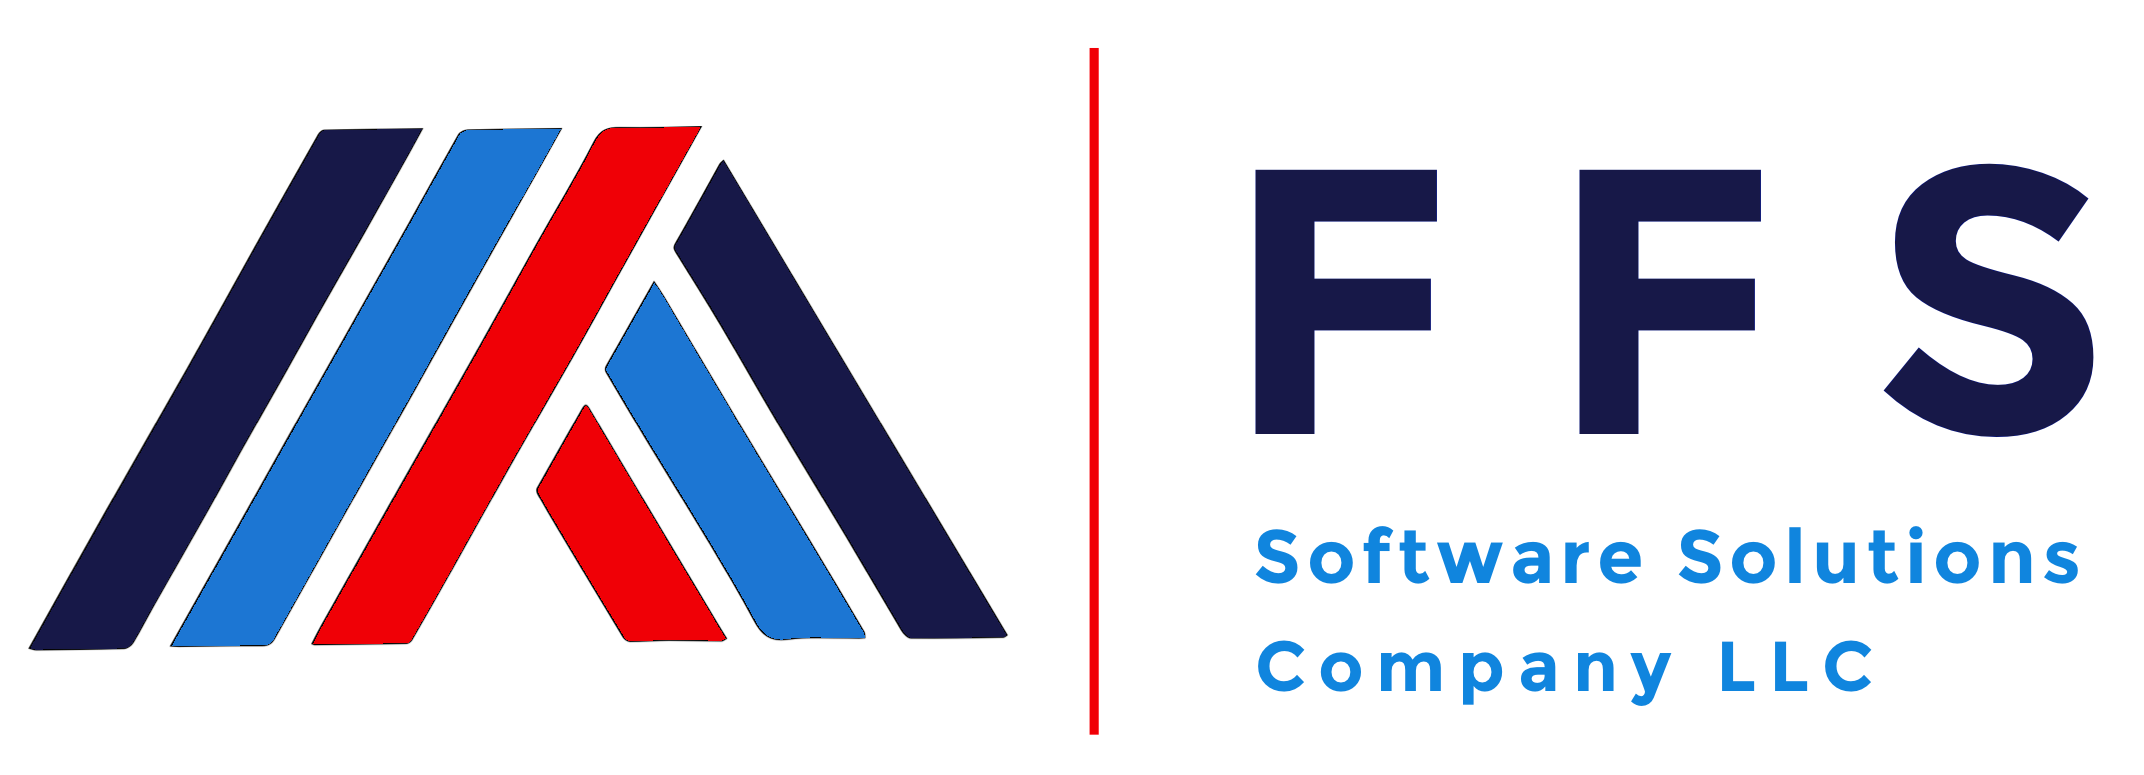 FFS Software Solutions